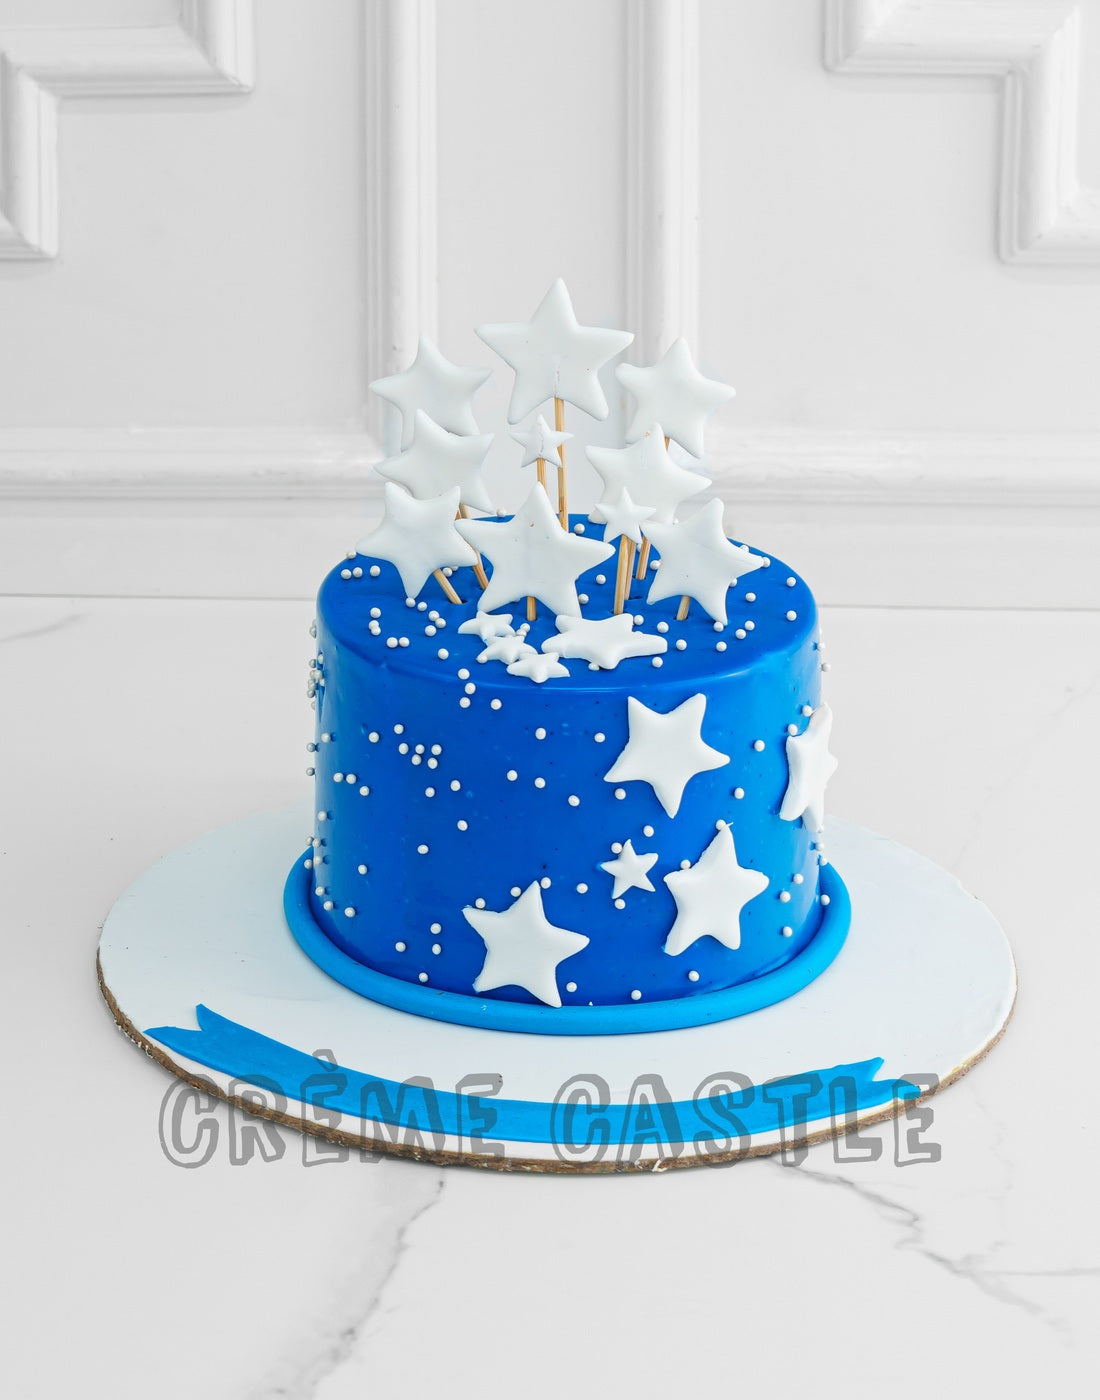 Stars and Night Cake. Cake Designs for Kids. Noida & Gurgaon